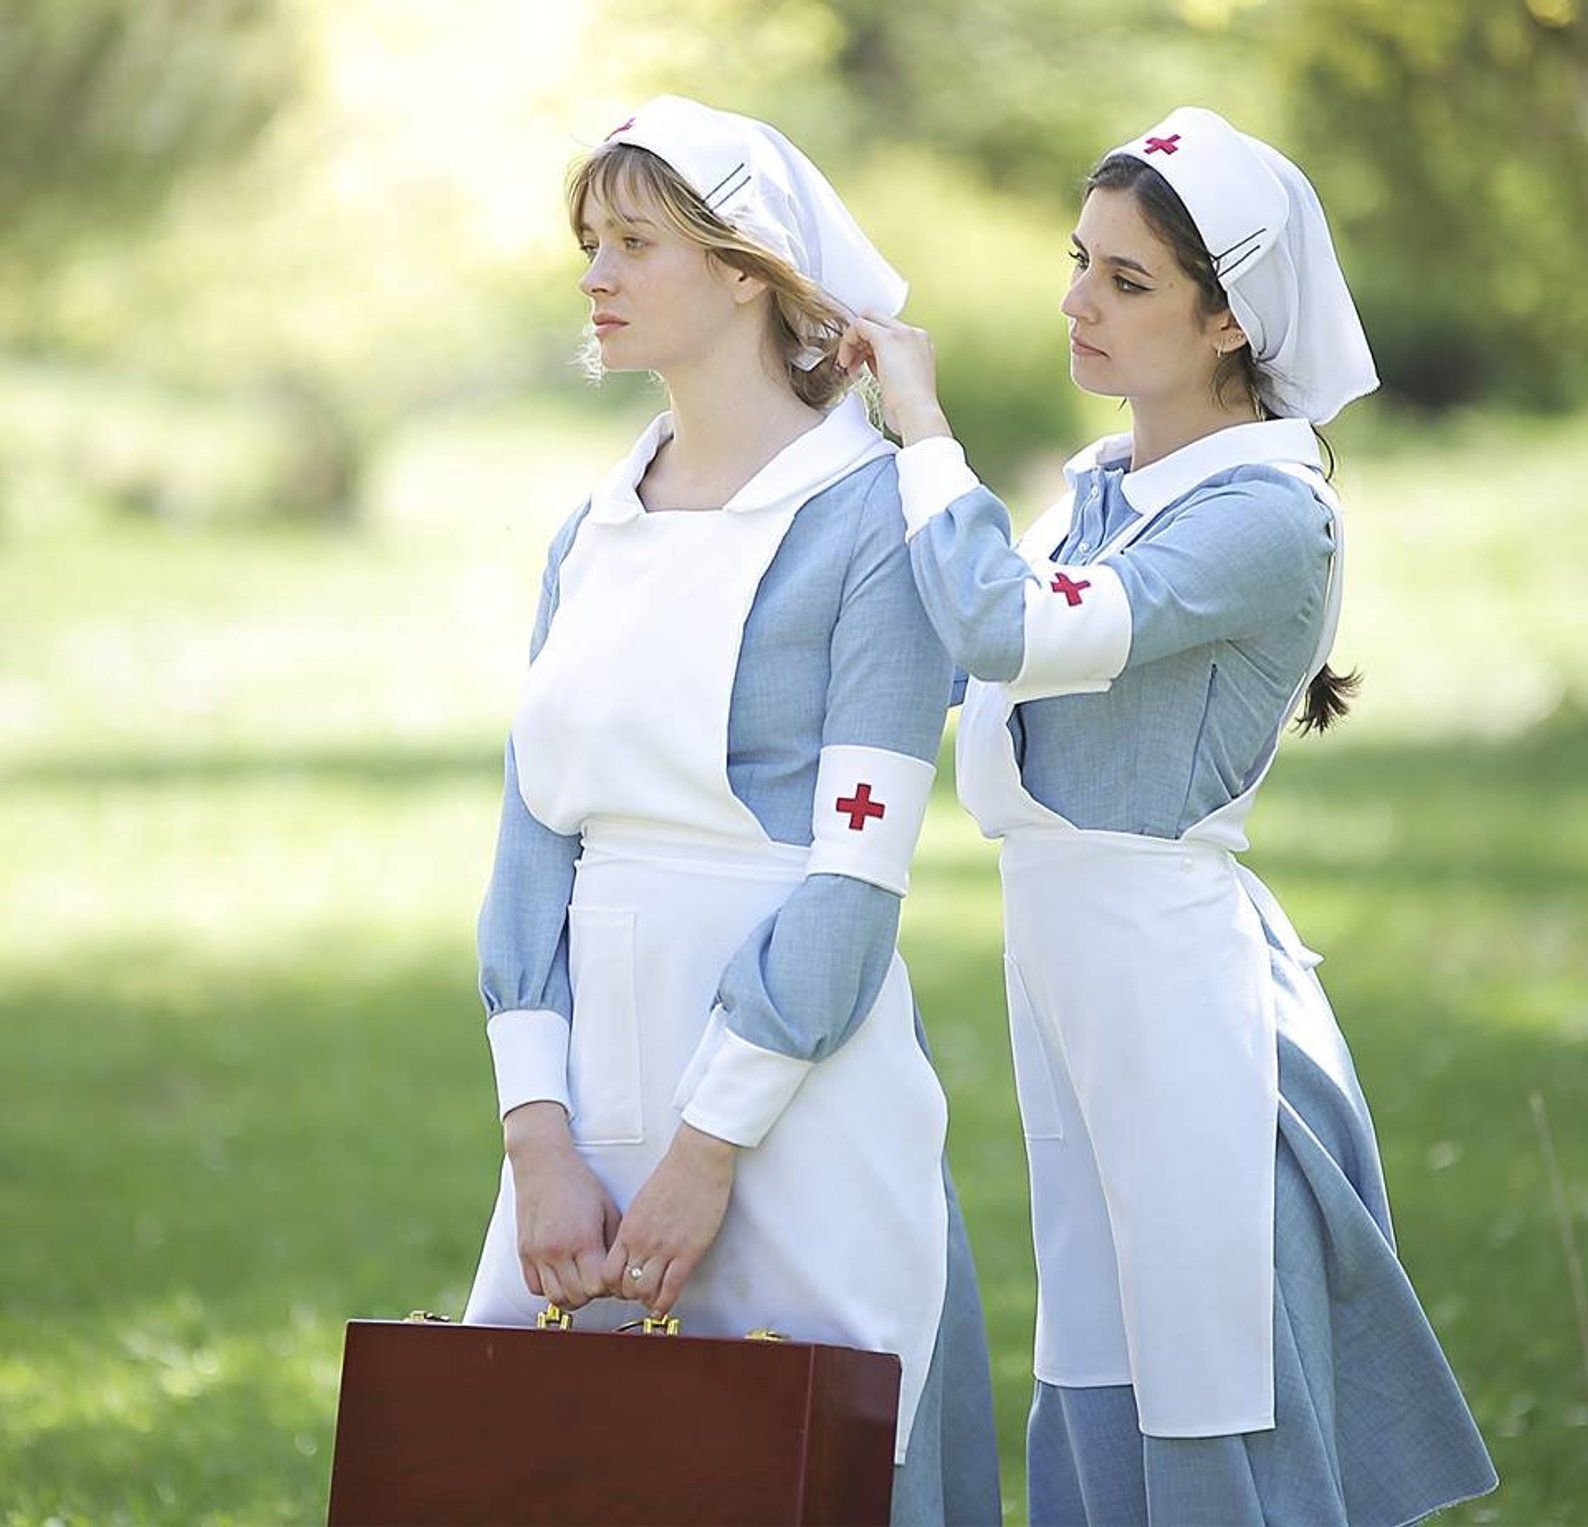 Косплей медсестра. Форма медсестры. Одежда медсестры. Косынка медсестры. Медсестра форма одежды.